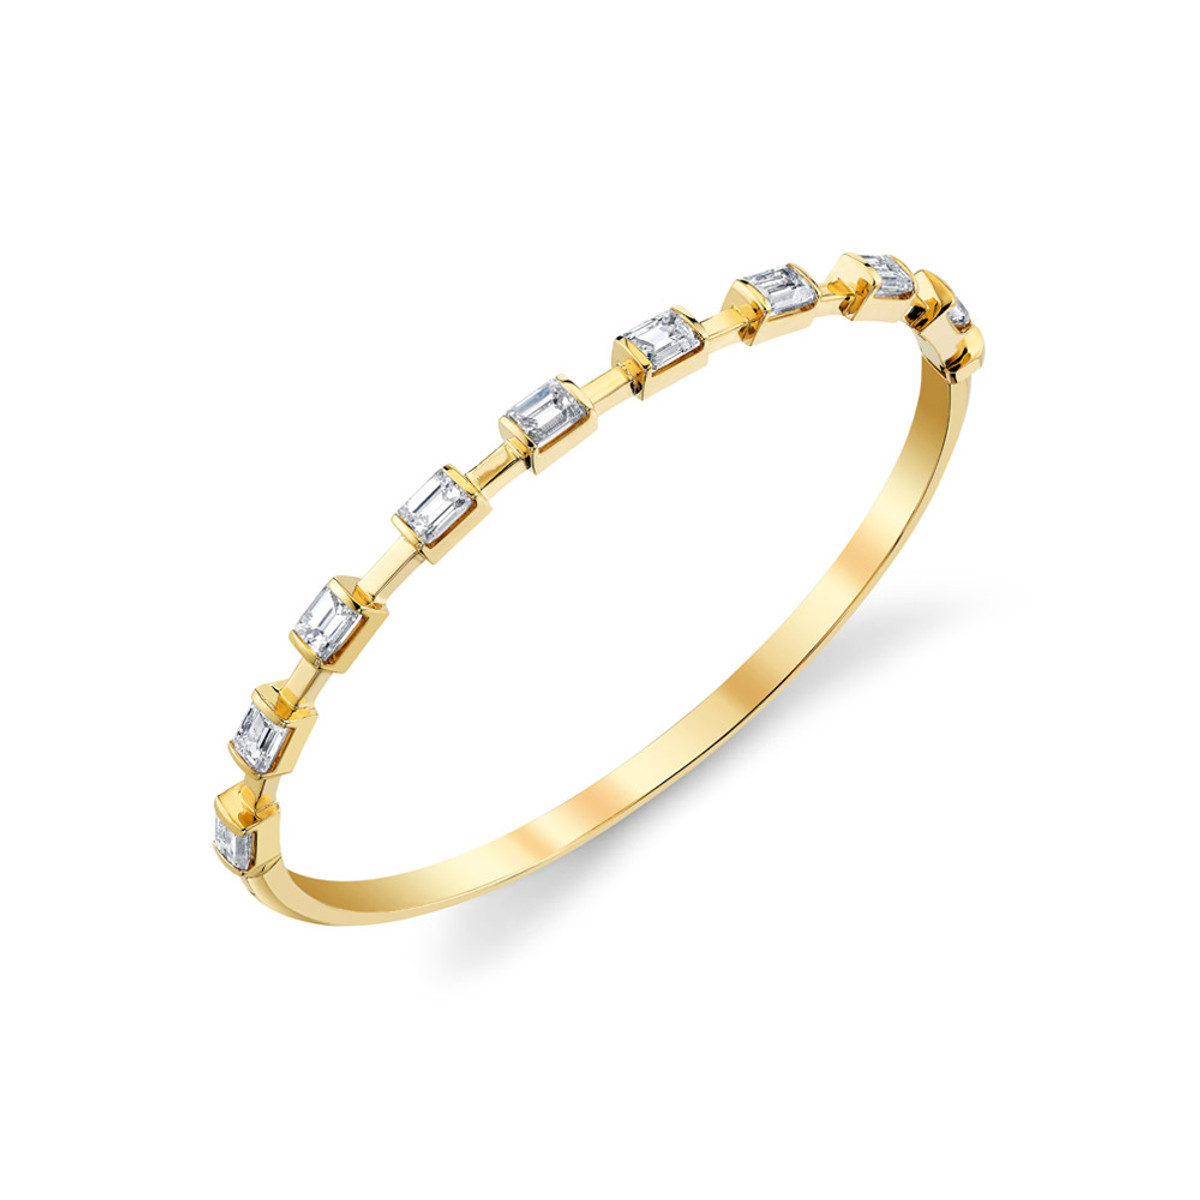 Hyde Park Collection 18K Yellow Gold Emerald Diamond Bangle Bracelet-55782 Product Image